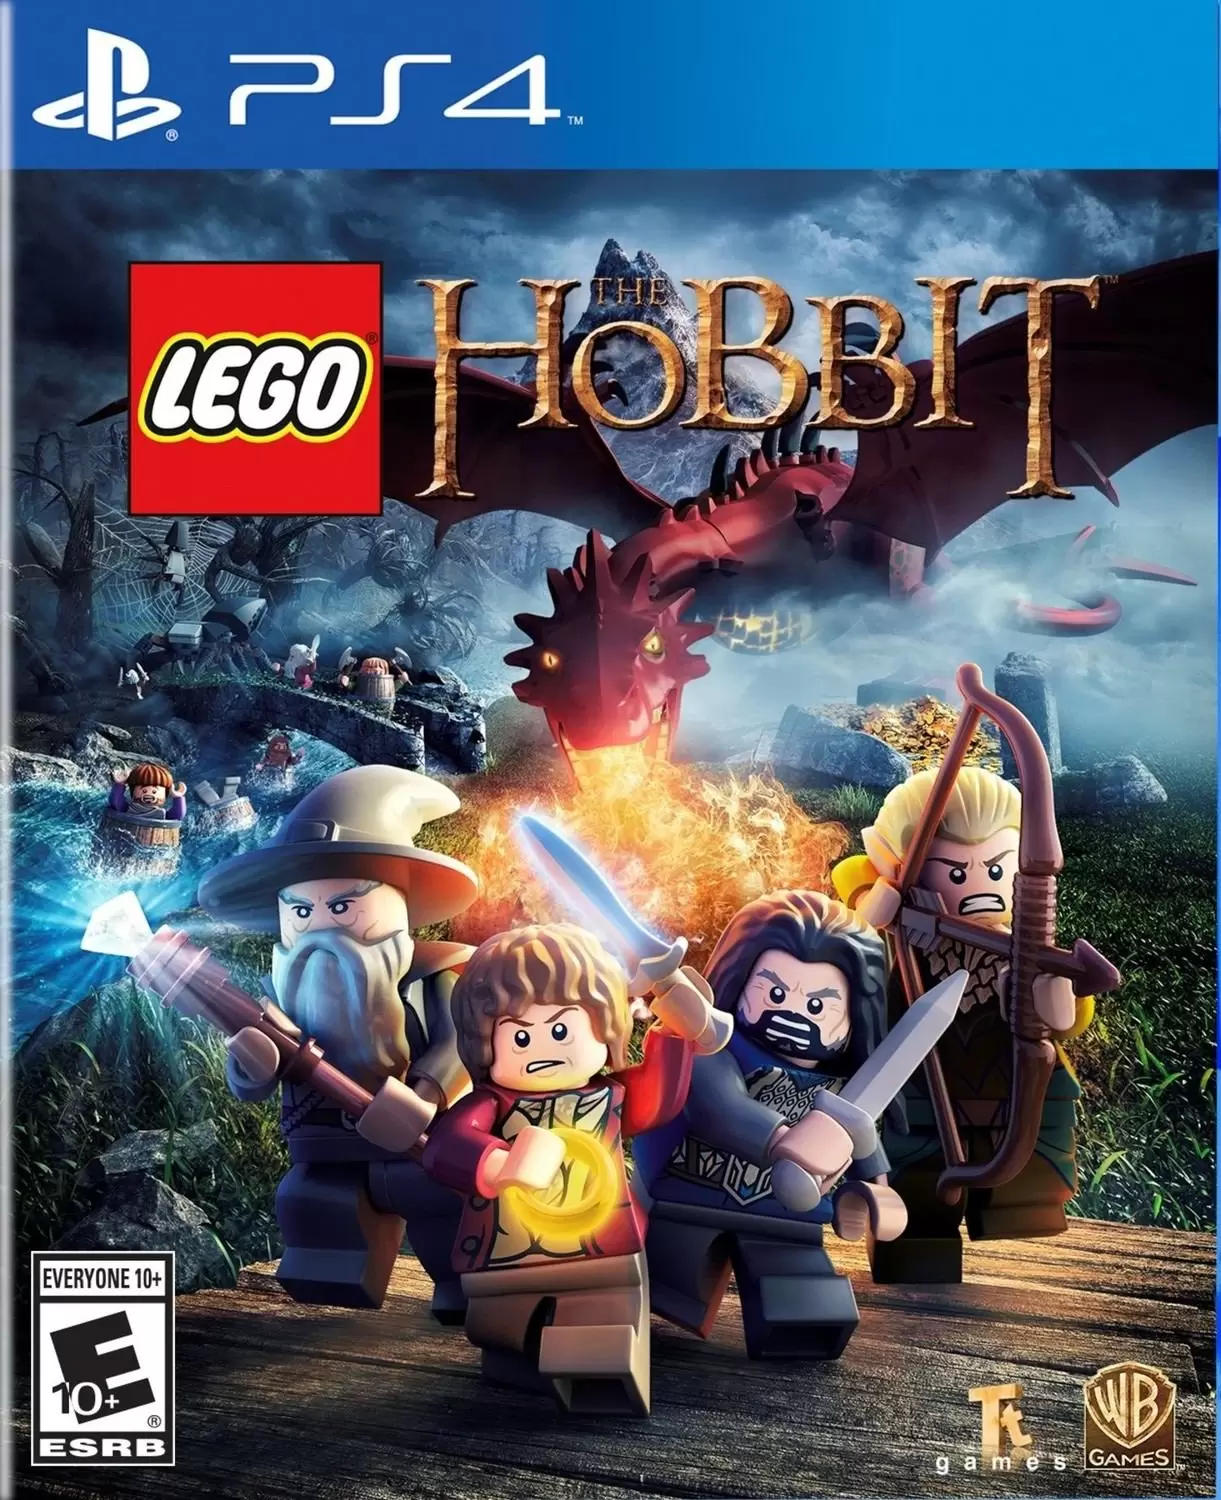 PS4 Games - Lego The Hobbit